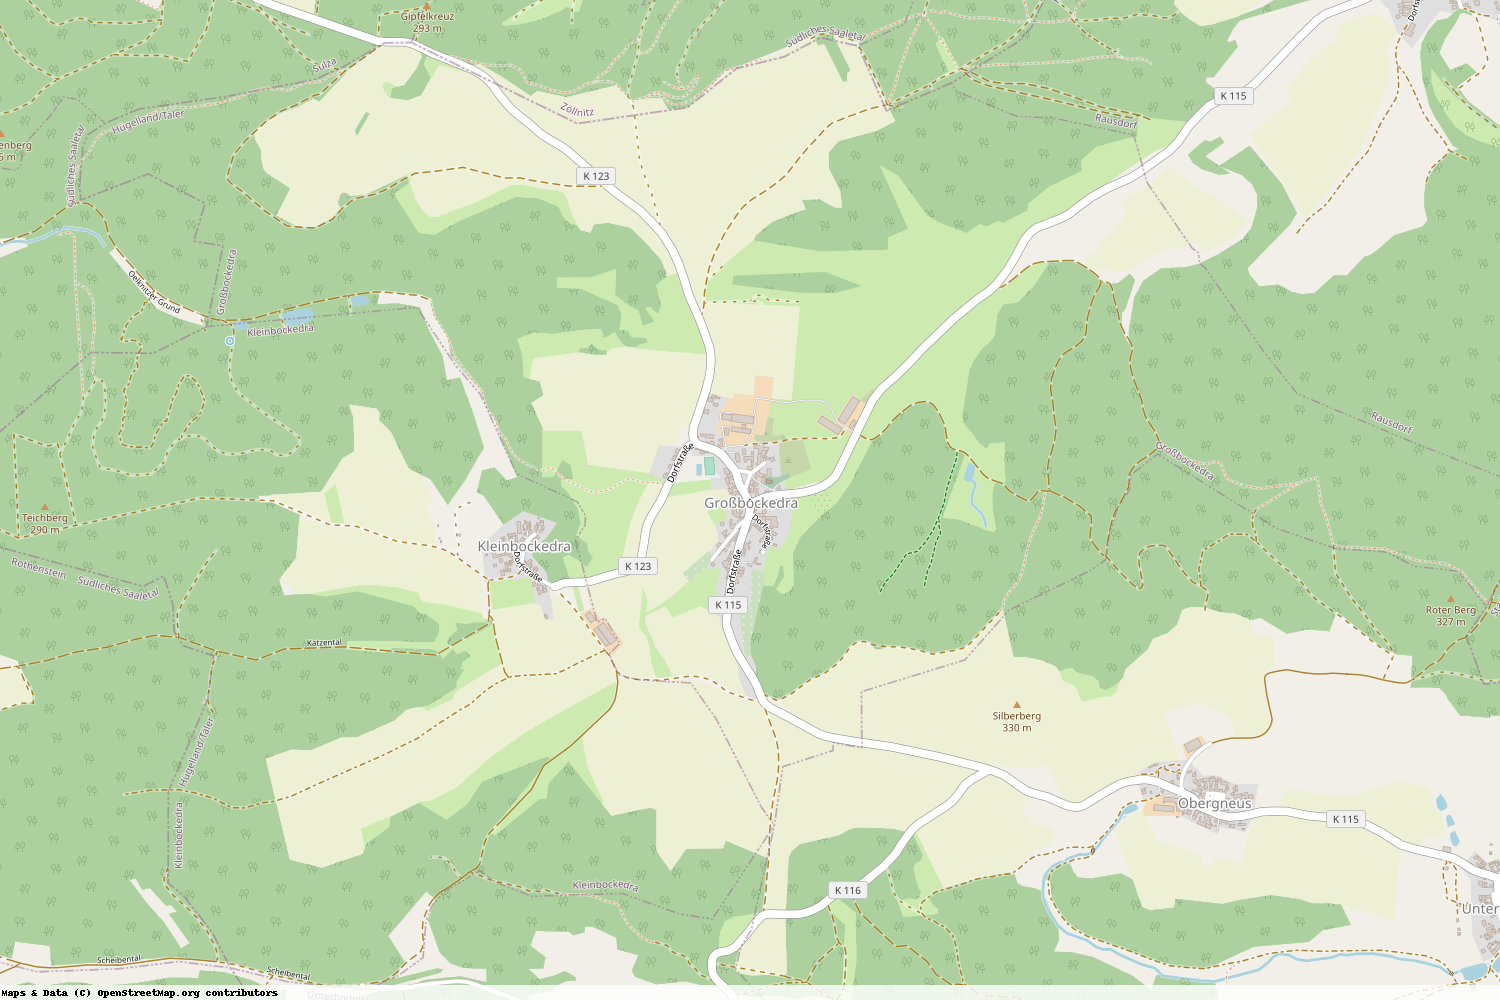 Ist gerade Stromausfall in Thüringen - Saale-Holzland-Kreis - Großbockedra?